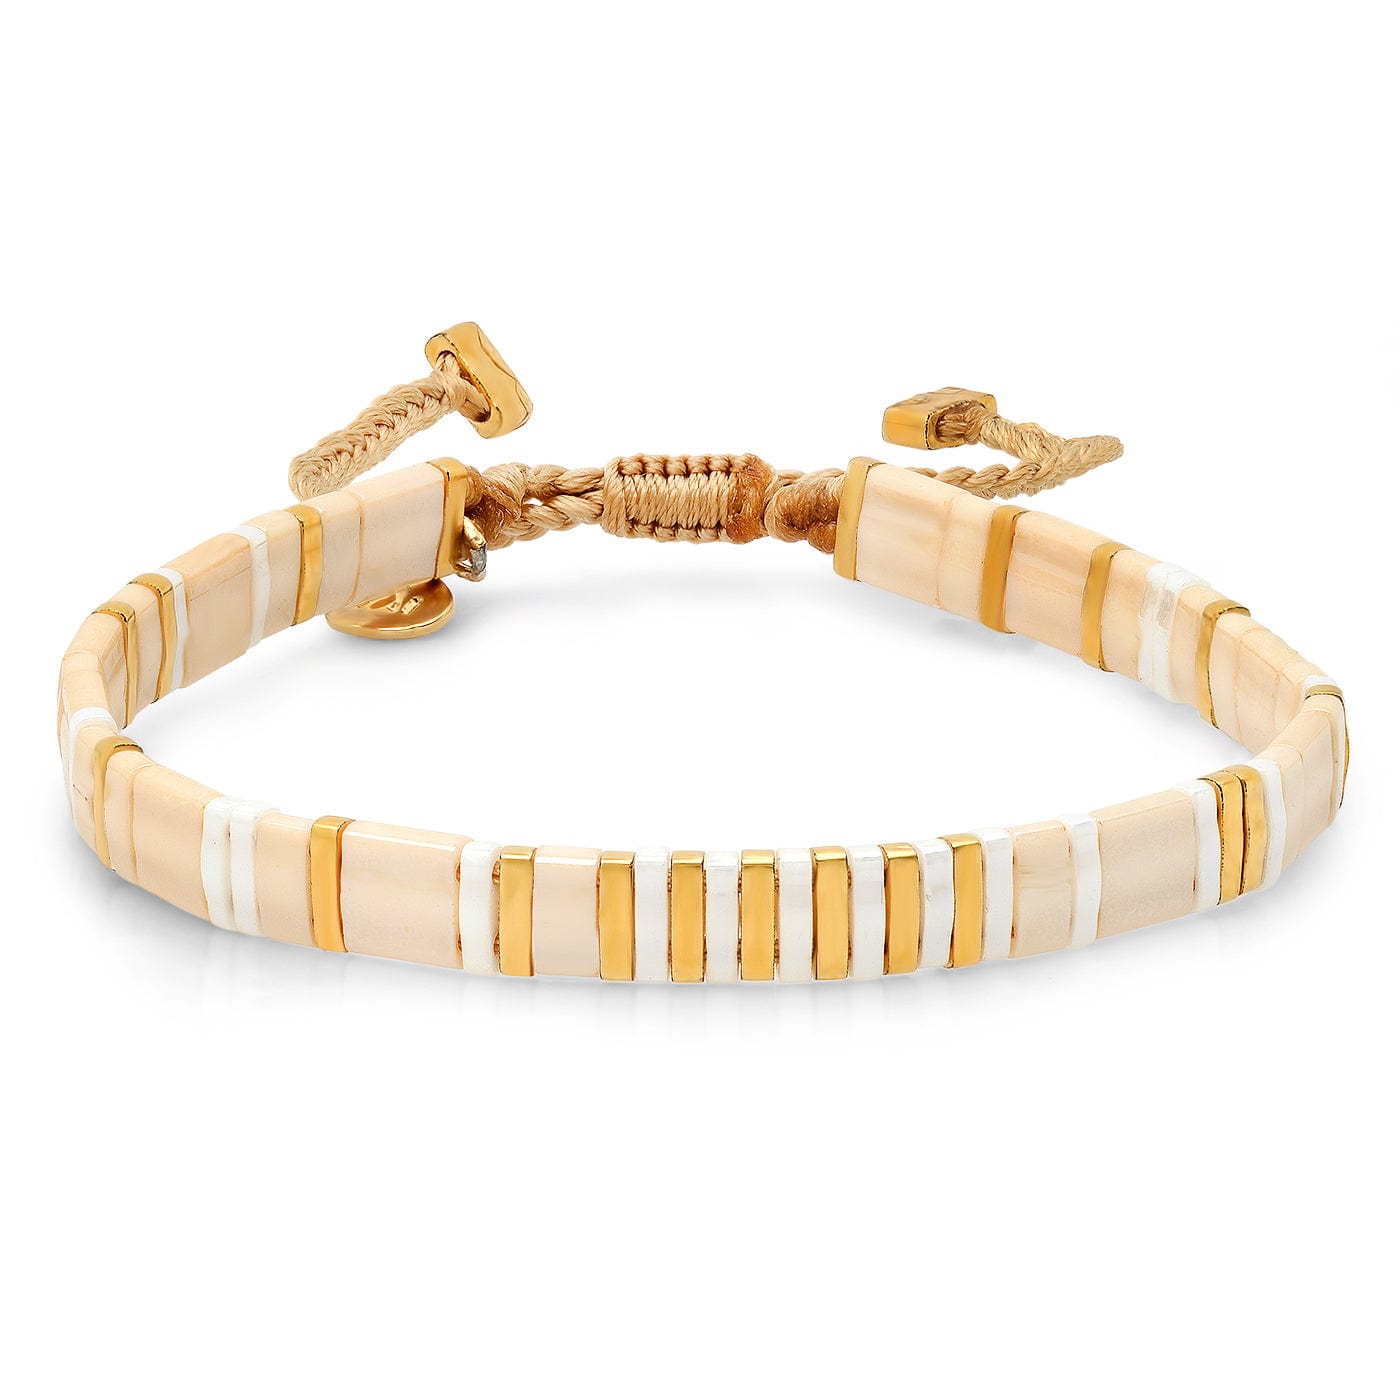 TAI JEWELRY Bracelet Stripes And Blocks Bracelet In Seashell